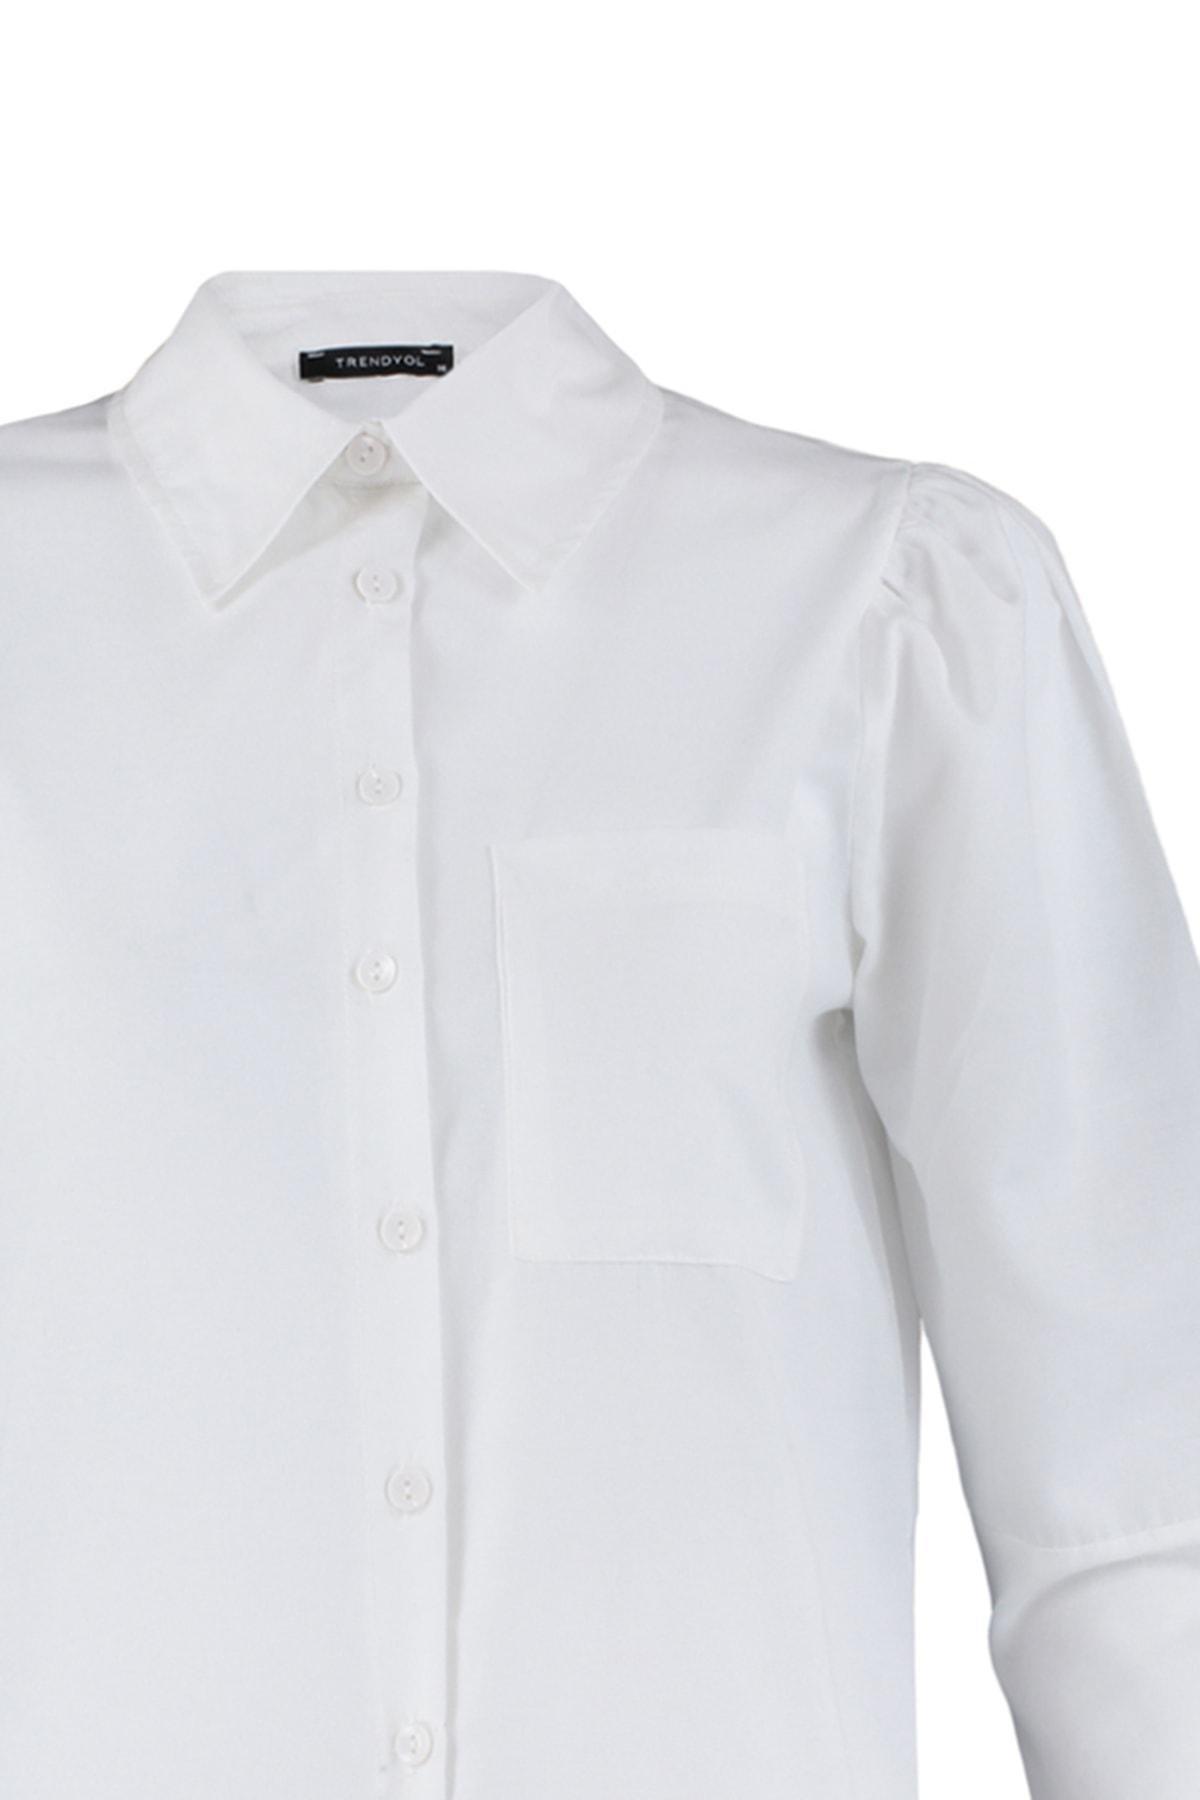 Trendyol - White Collared Shirt